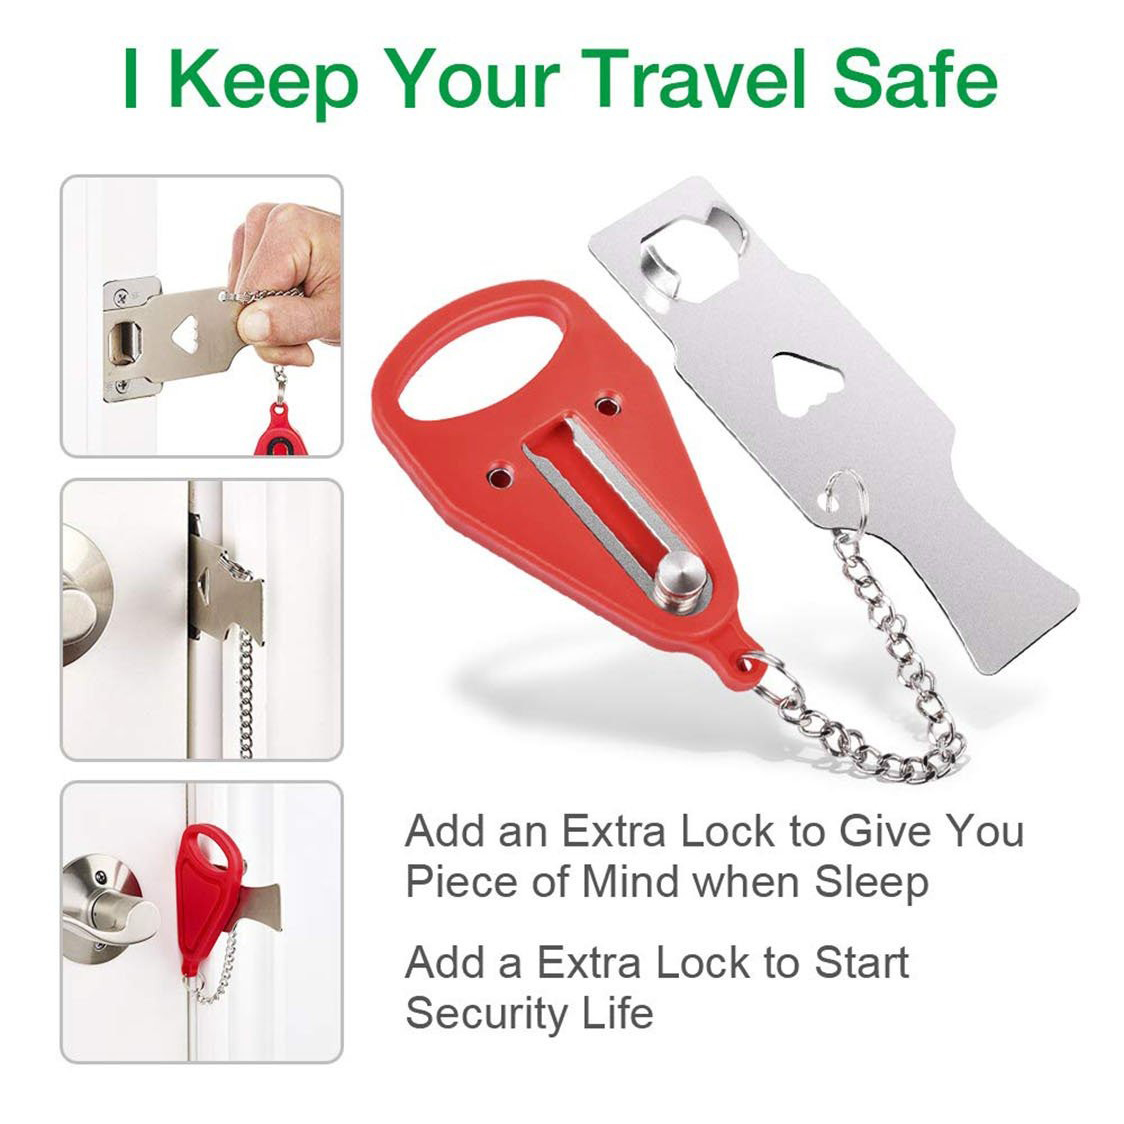 Security lock - Travel Lock, AirBNB Lock, School Lockdown Lock